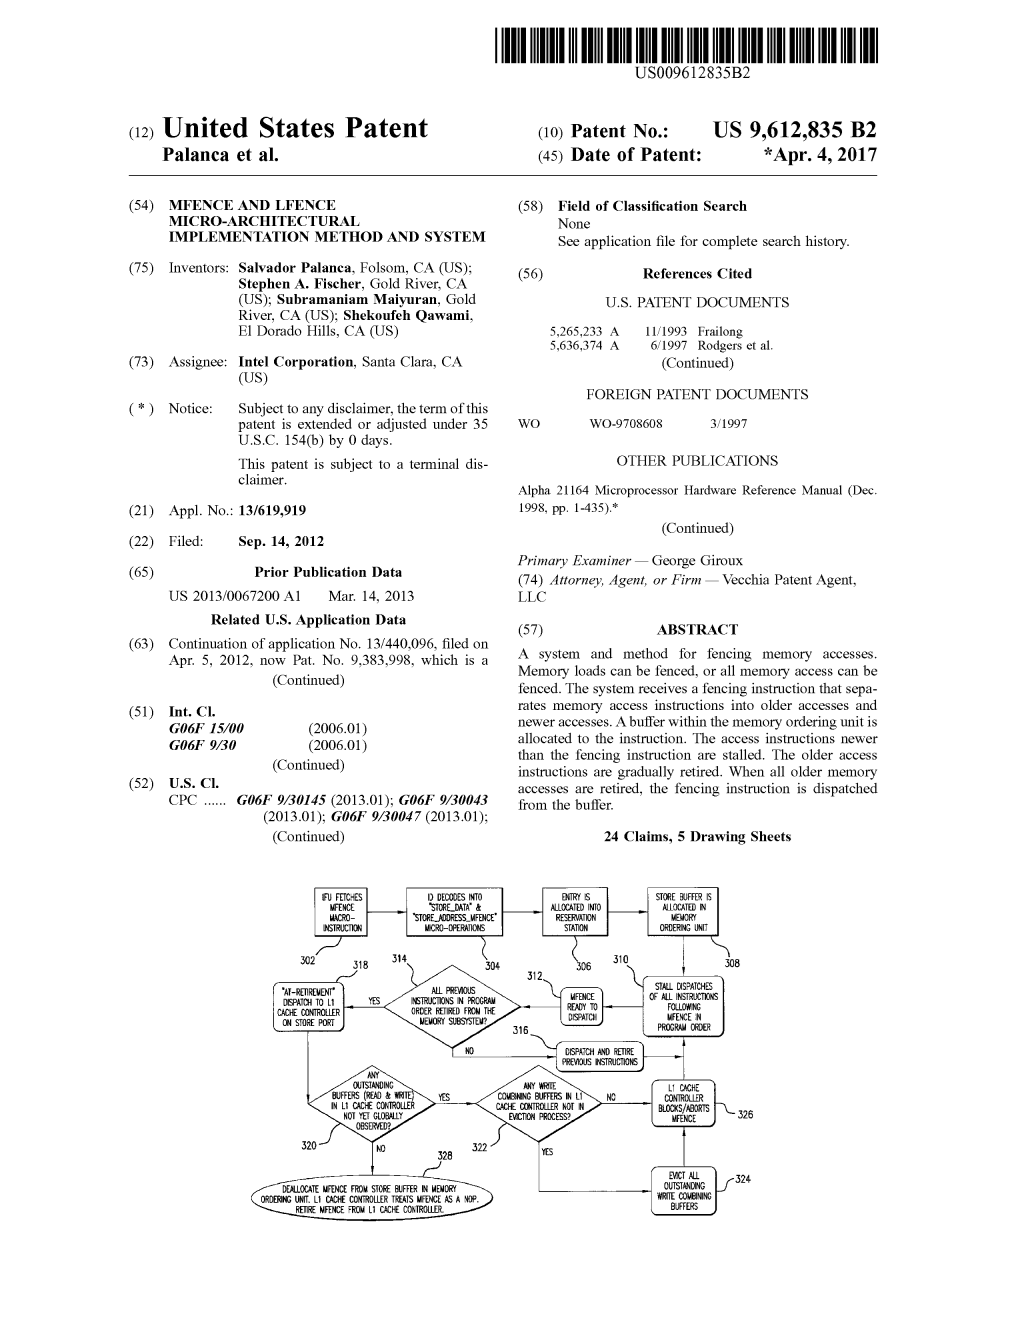 (12) United States Patent (10) Patent No.: US 9,612,835 B2 Palanca Et Al